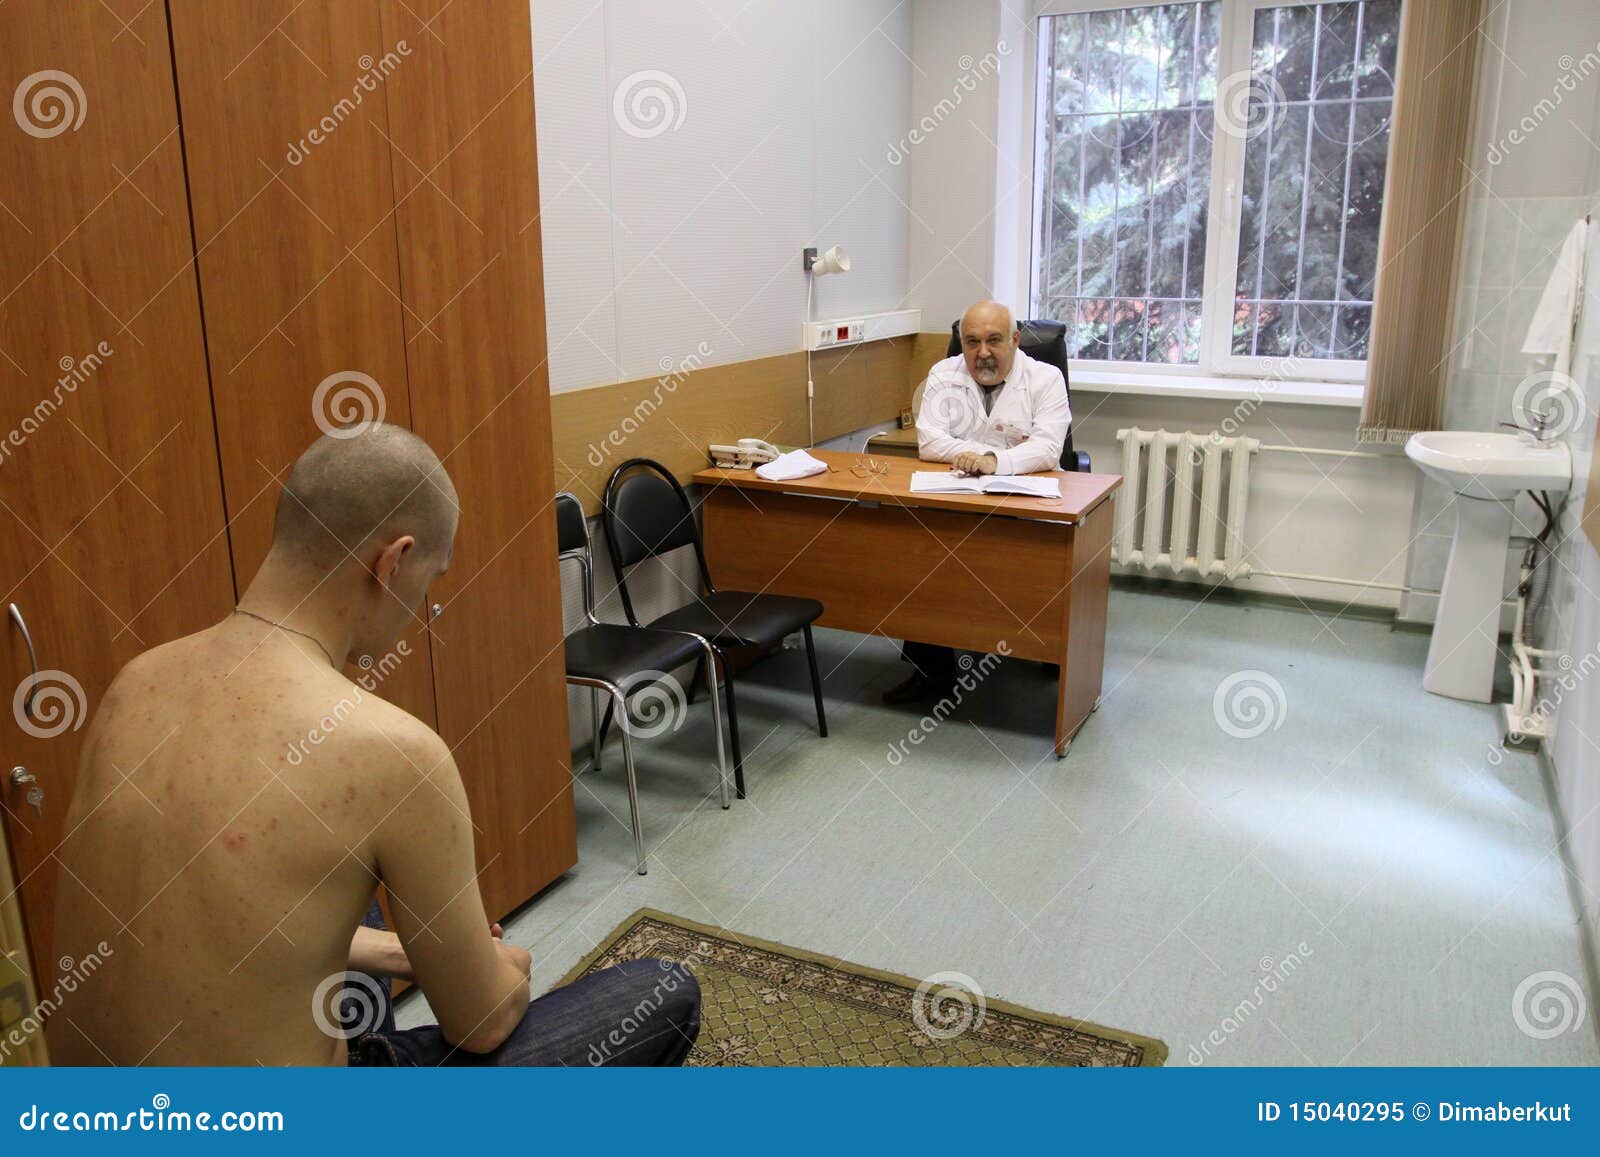 Medical Examination At The Recruitment Center Editorial Image Image